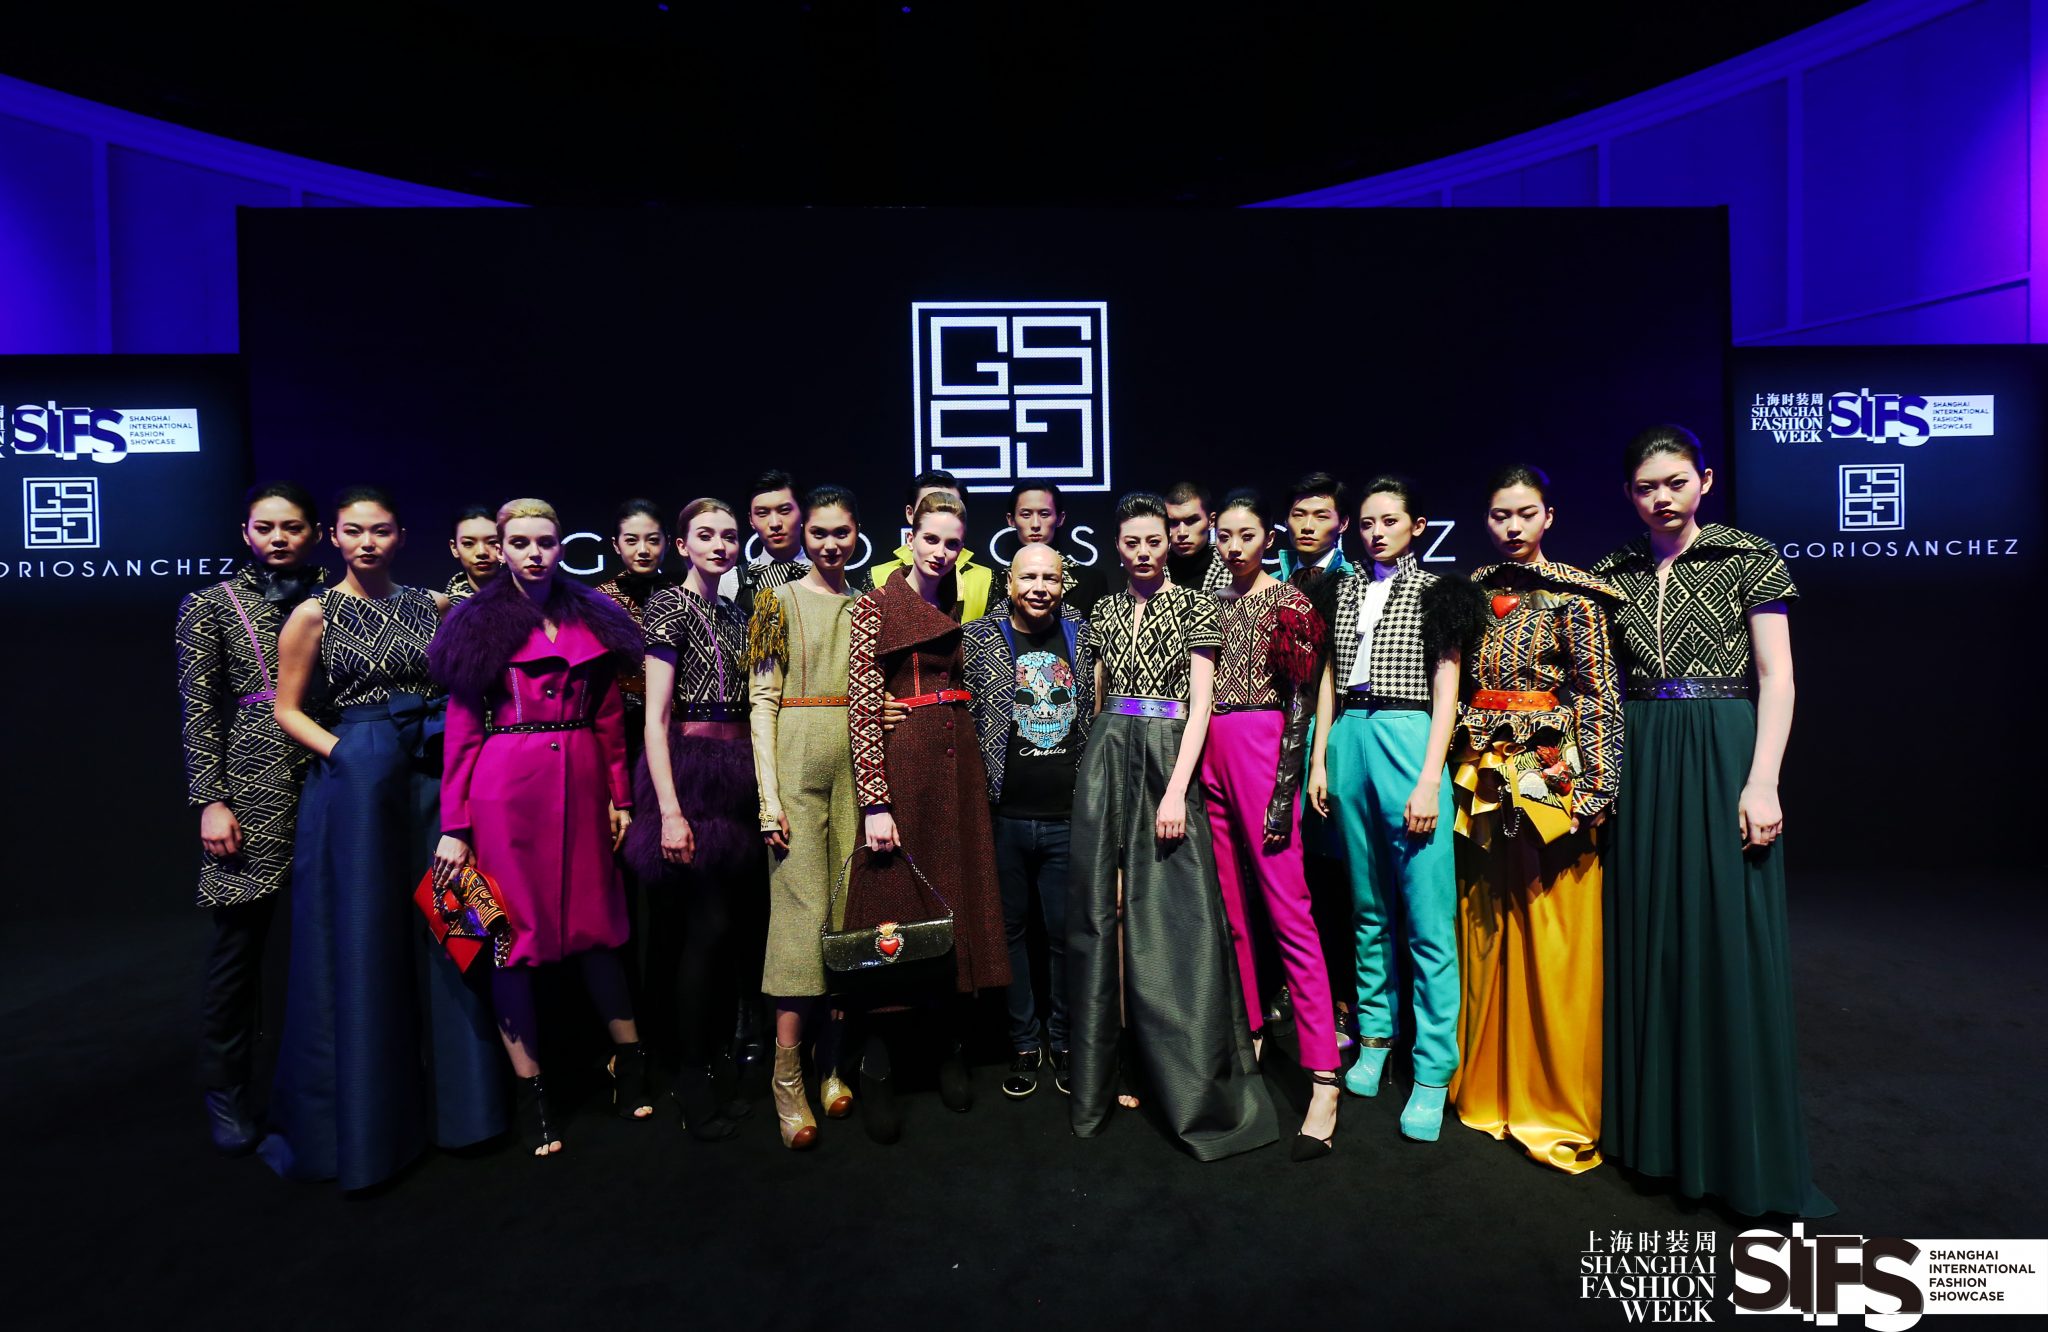 Gregorio Sanchez Closed Shanghai Fashion Week With a Mystical Show